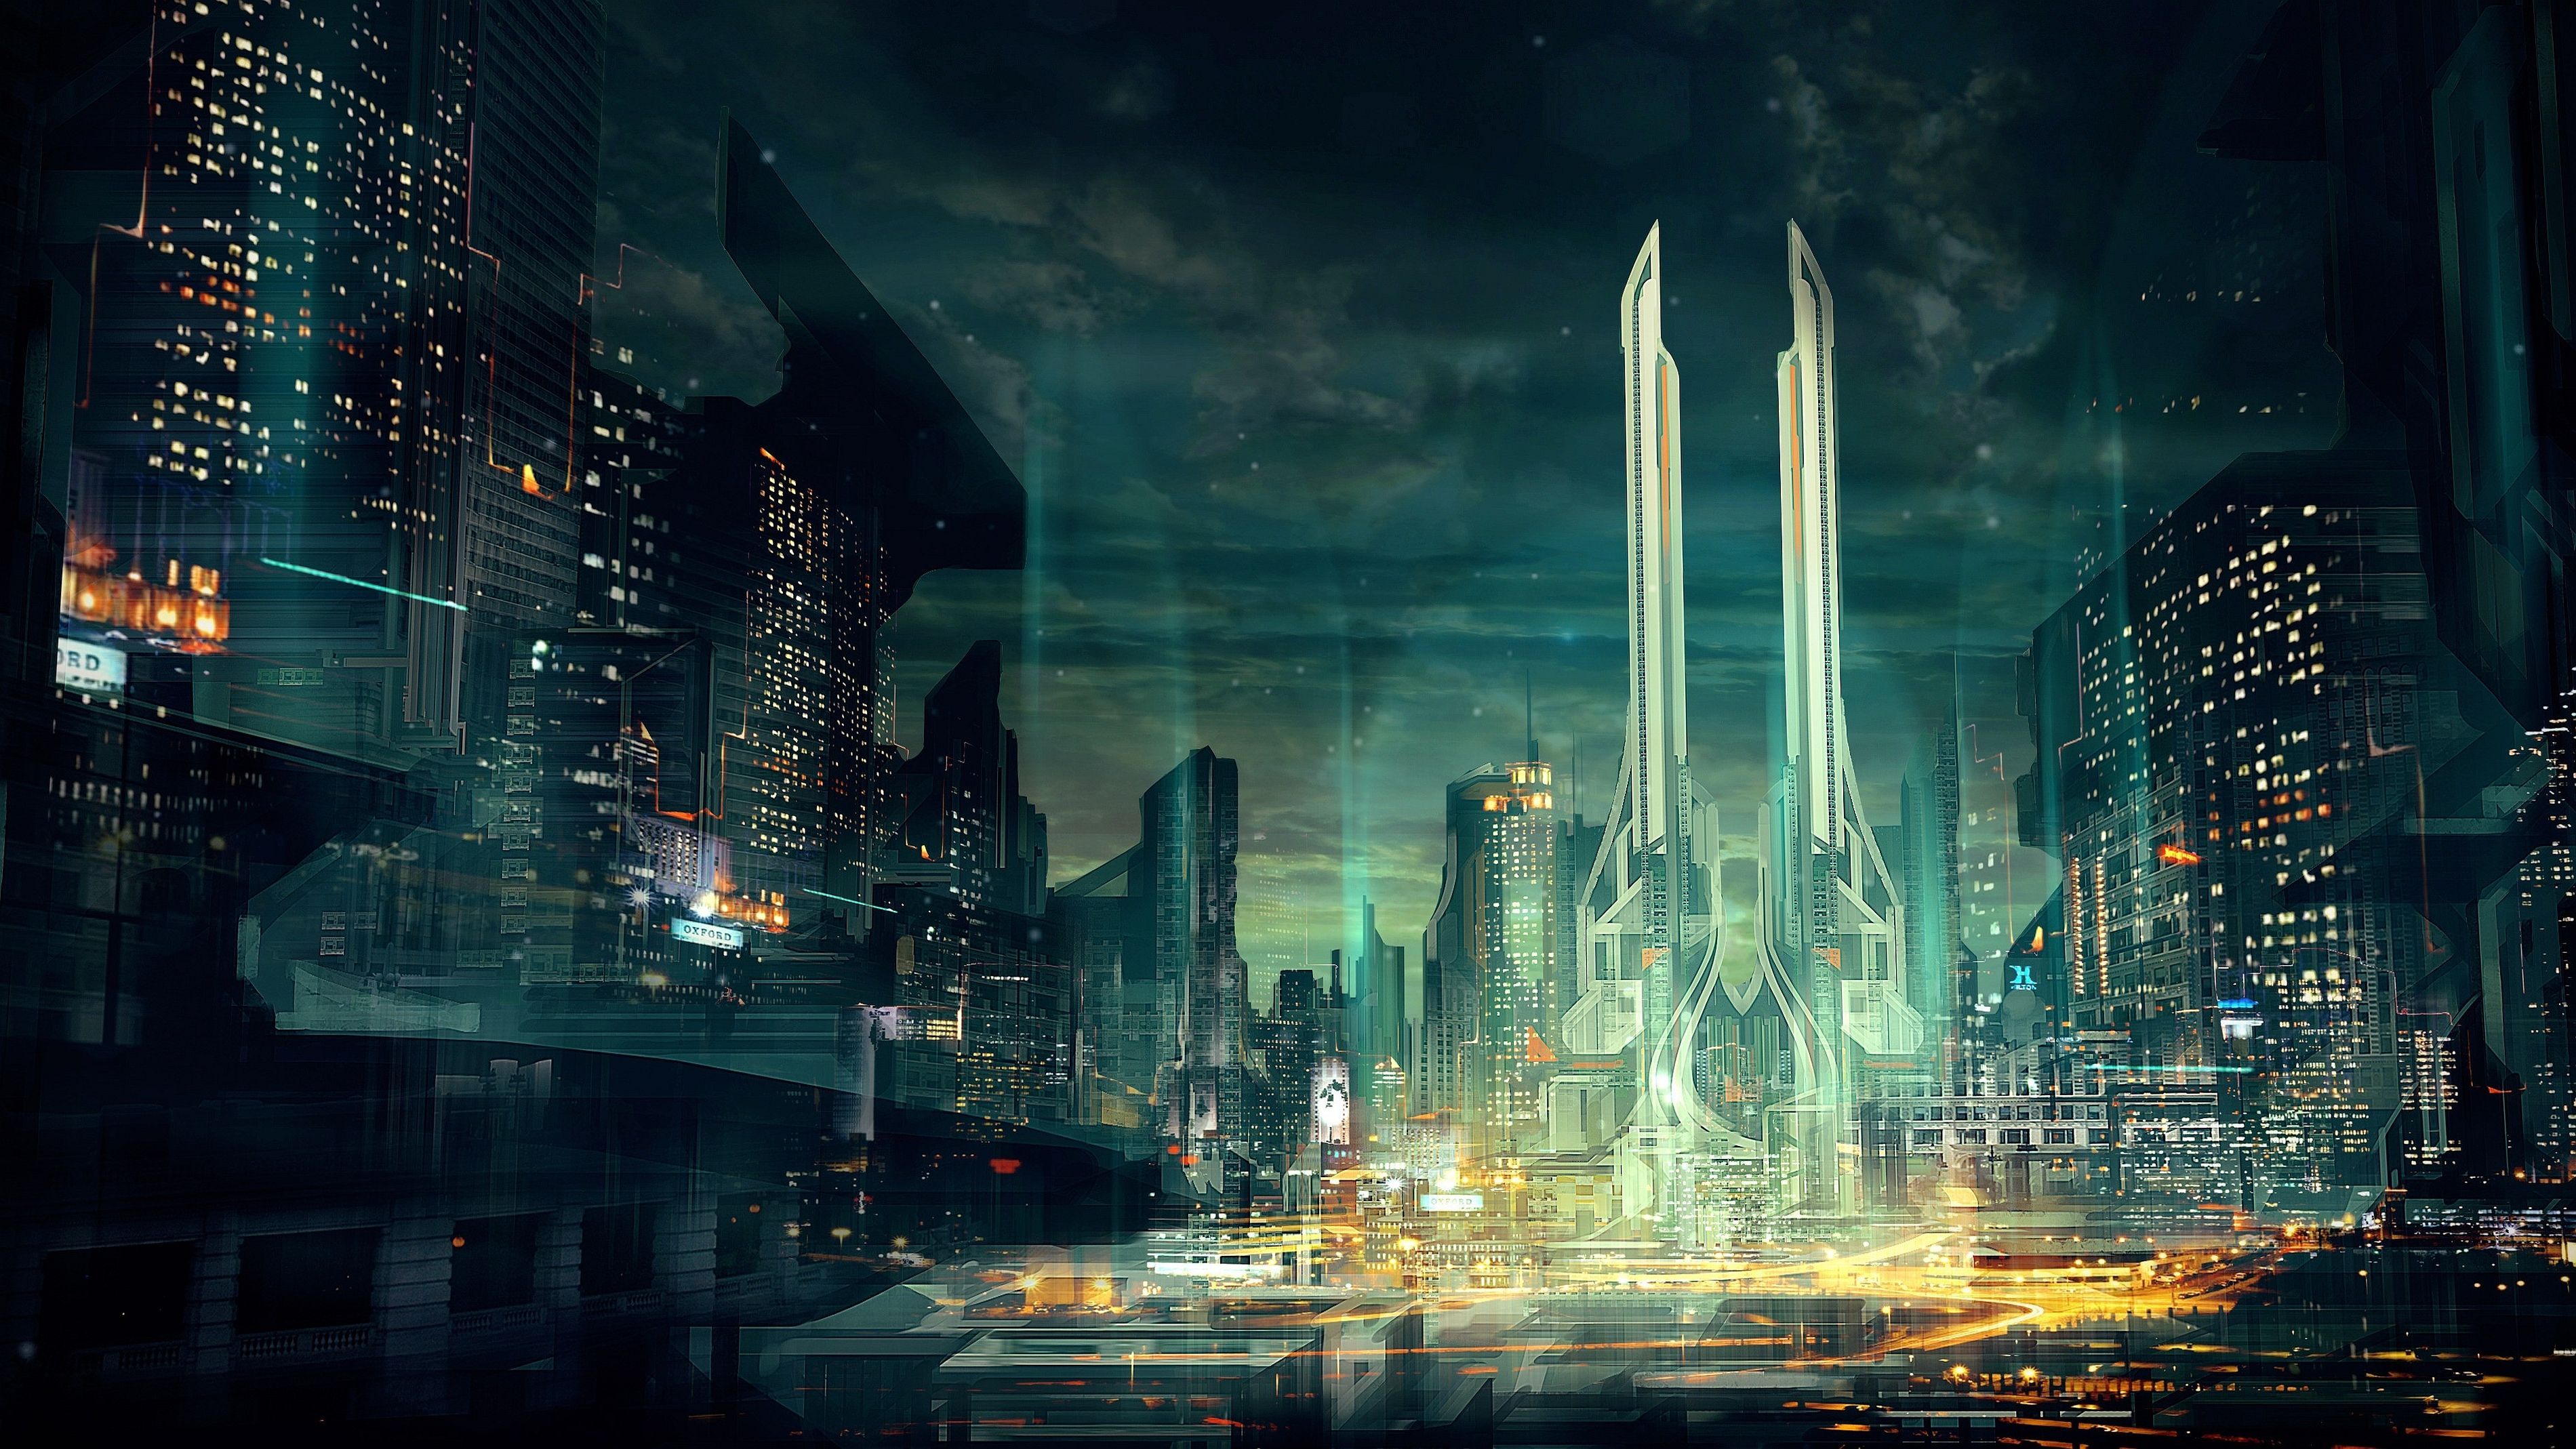 Sci Fi City Wallpaper Free Sci Fi City Background